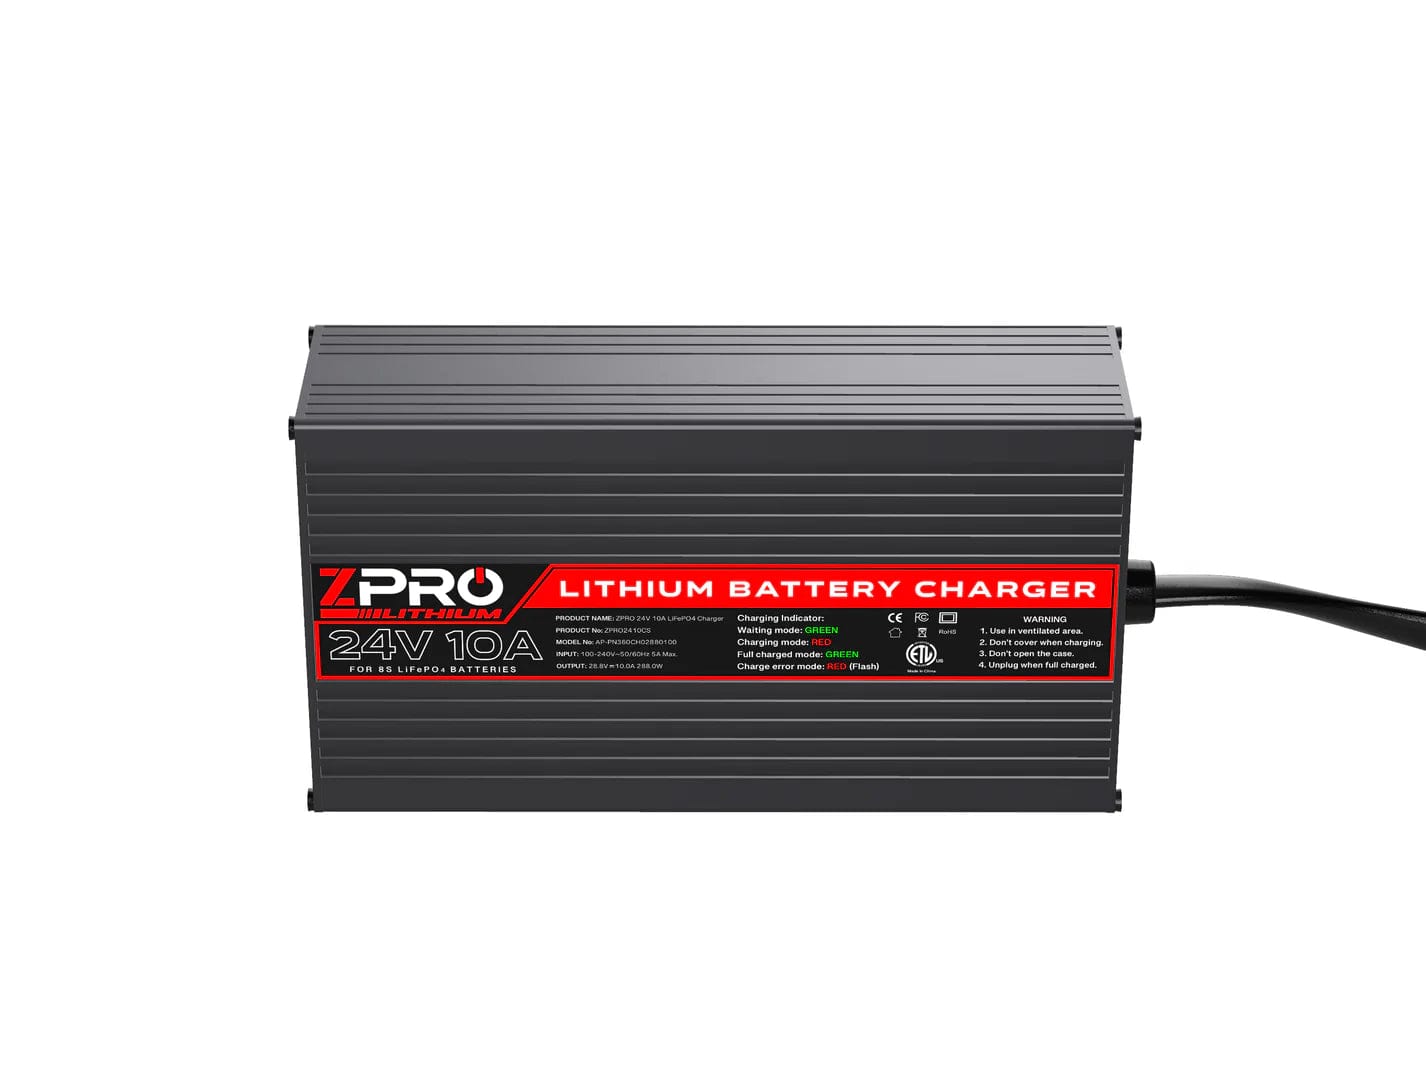 ZPro 24v 10a Lithium Battery Charger